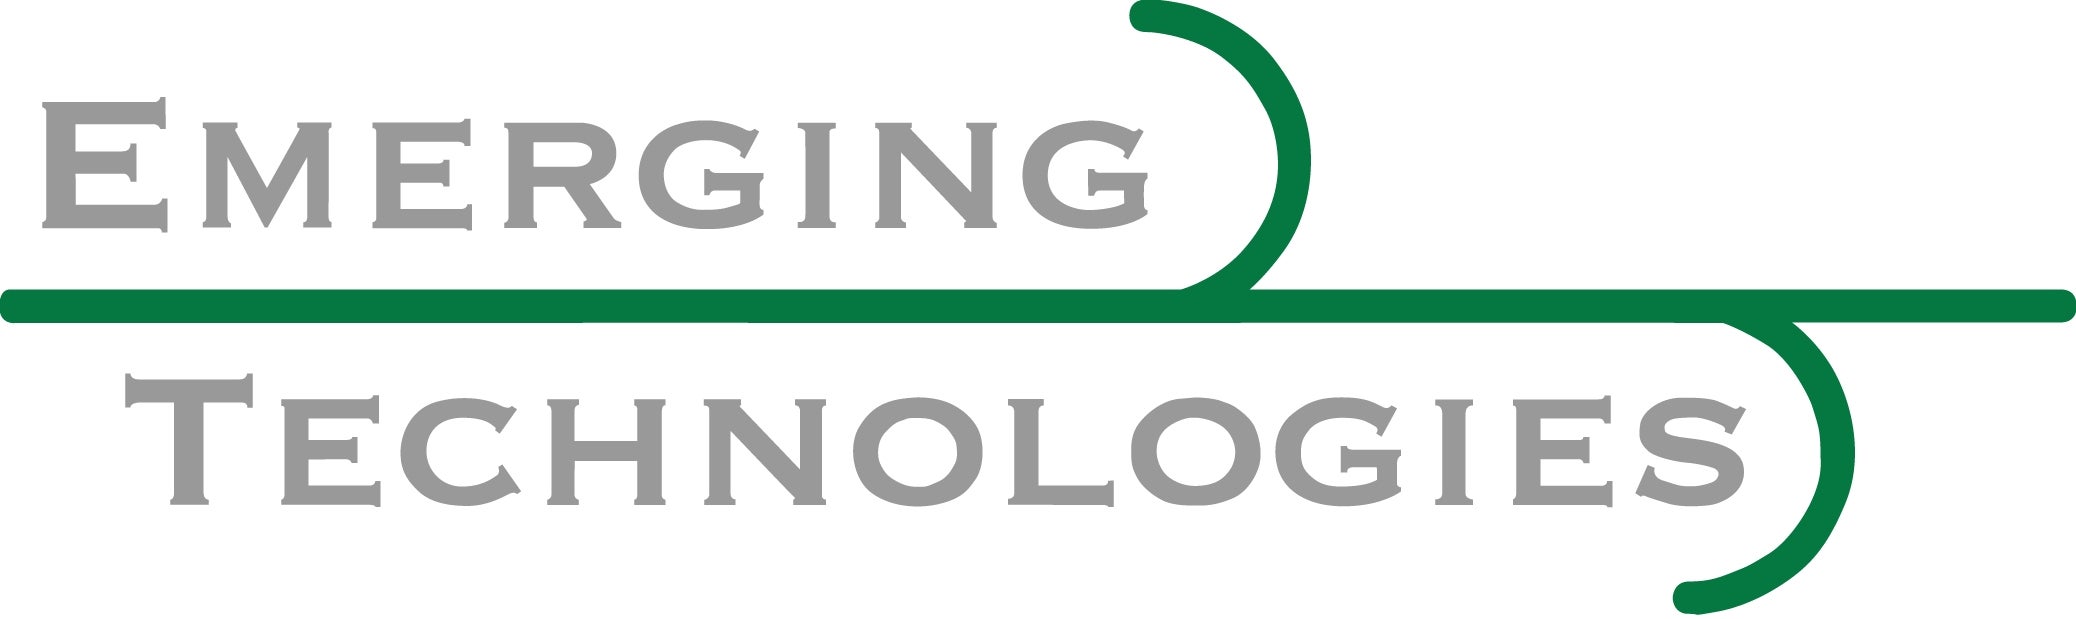 Emerging Technologies Corporation